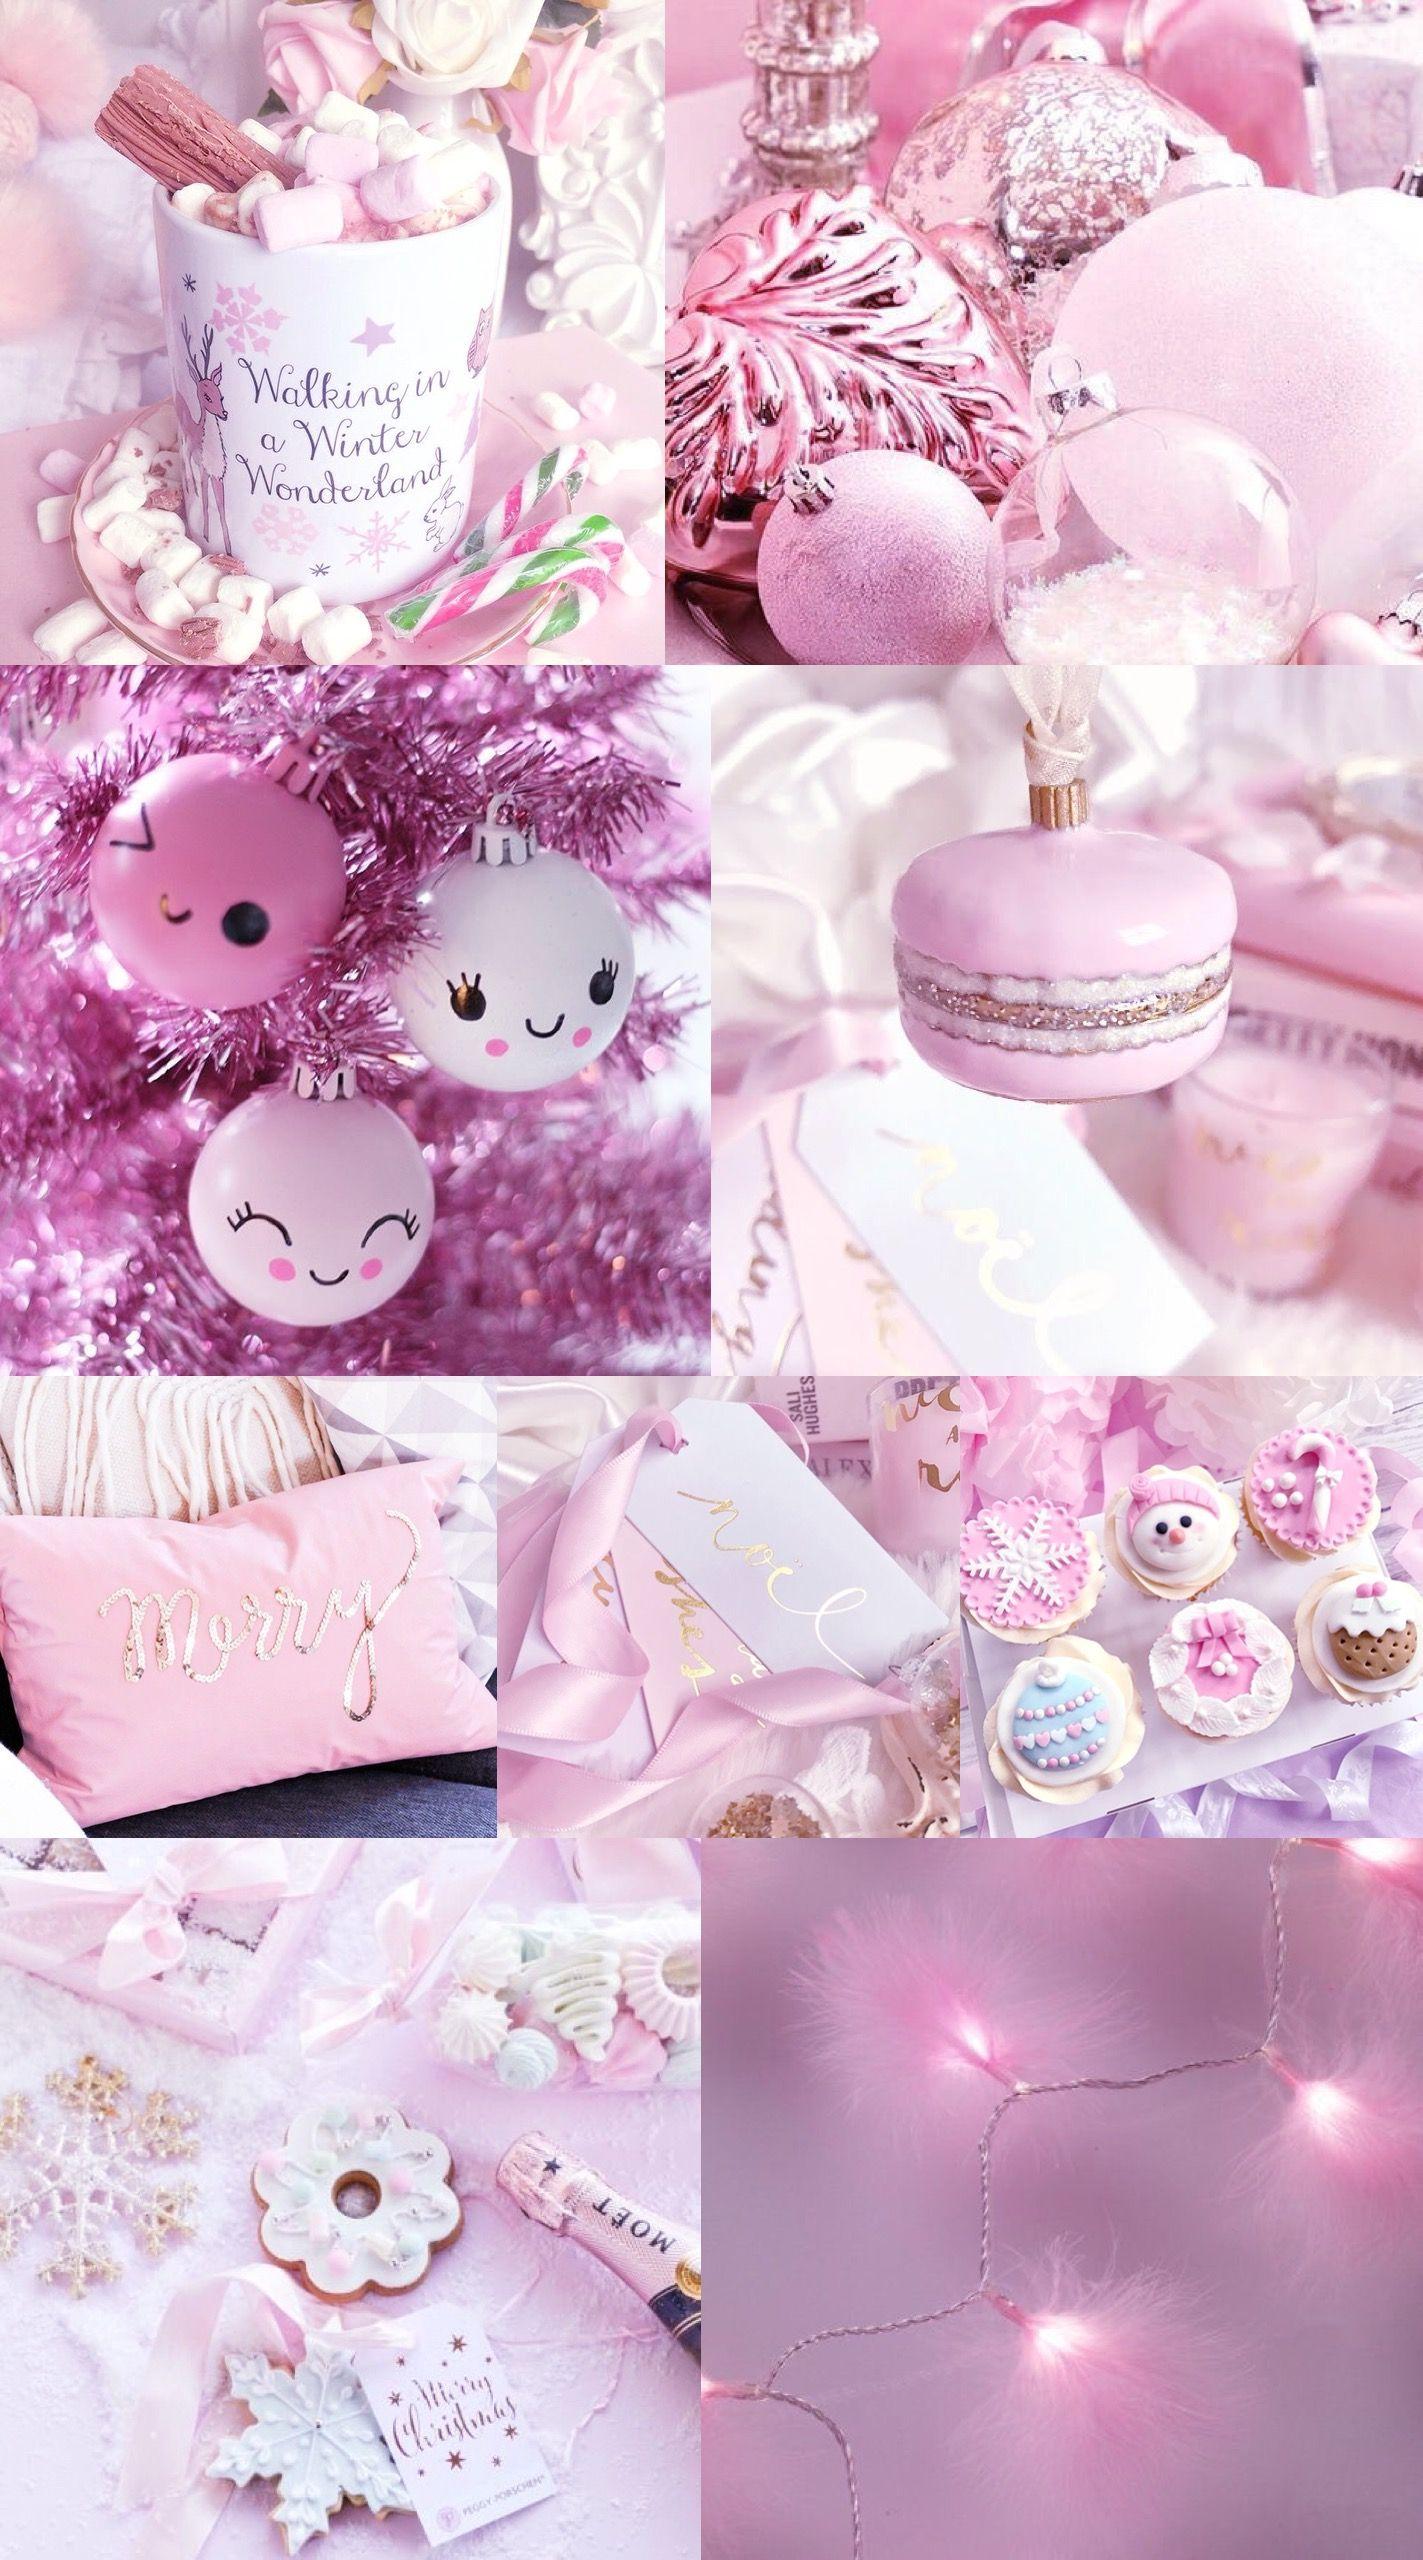 Wallpaper, background, hd, Christmas, iPhone, pink, purple, pretty